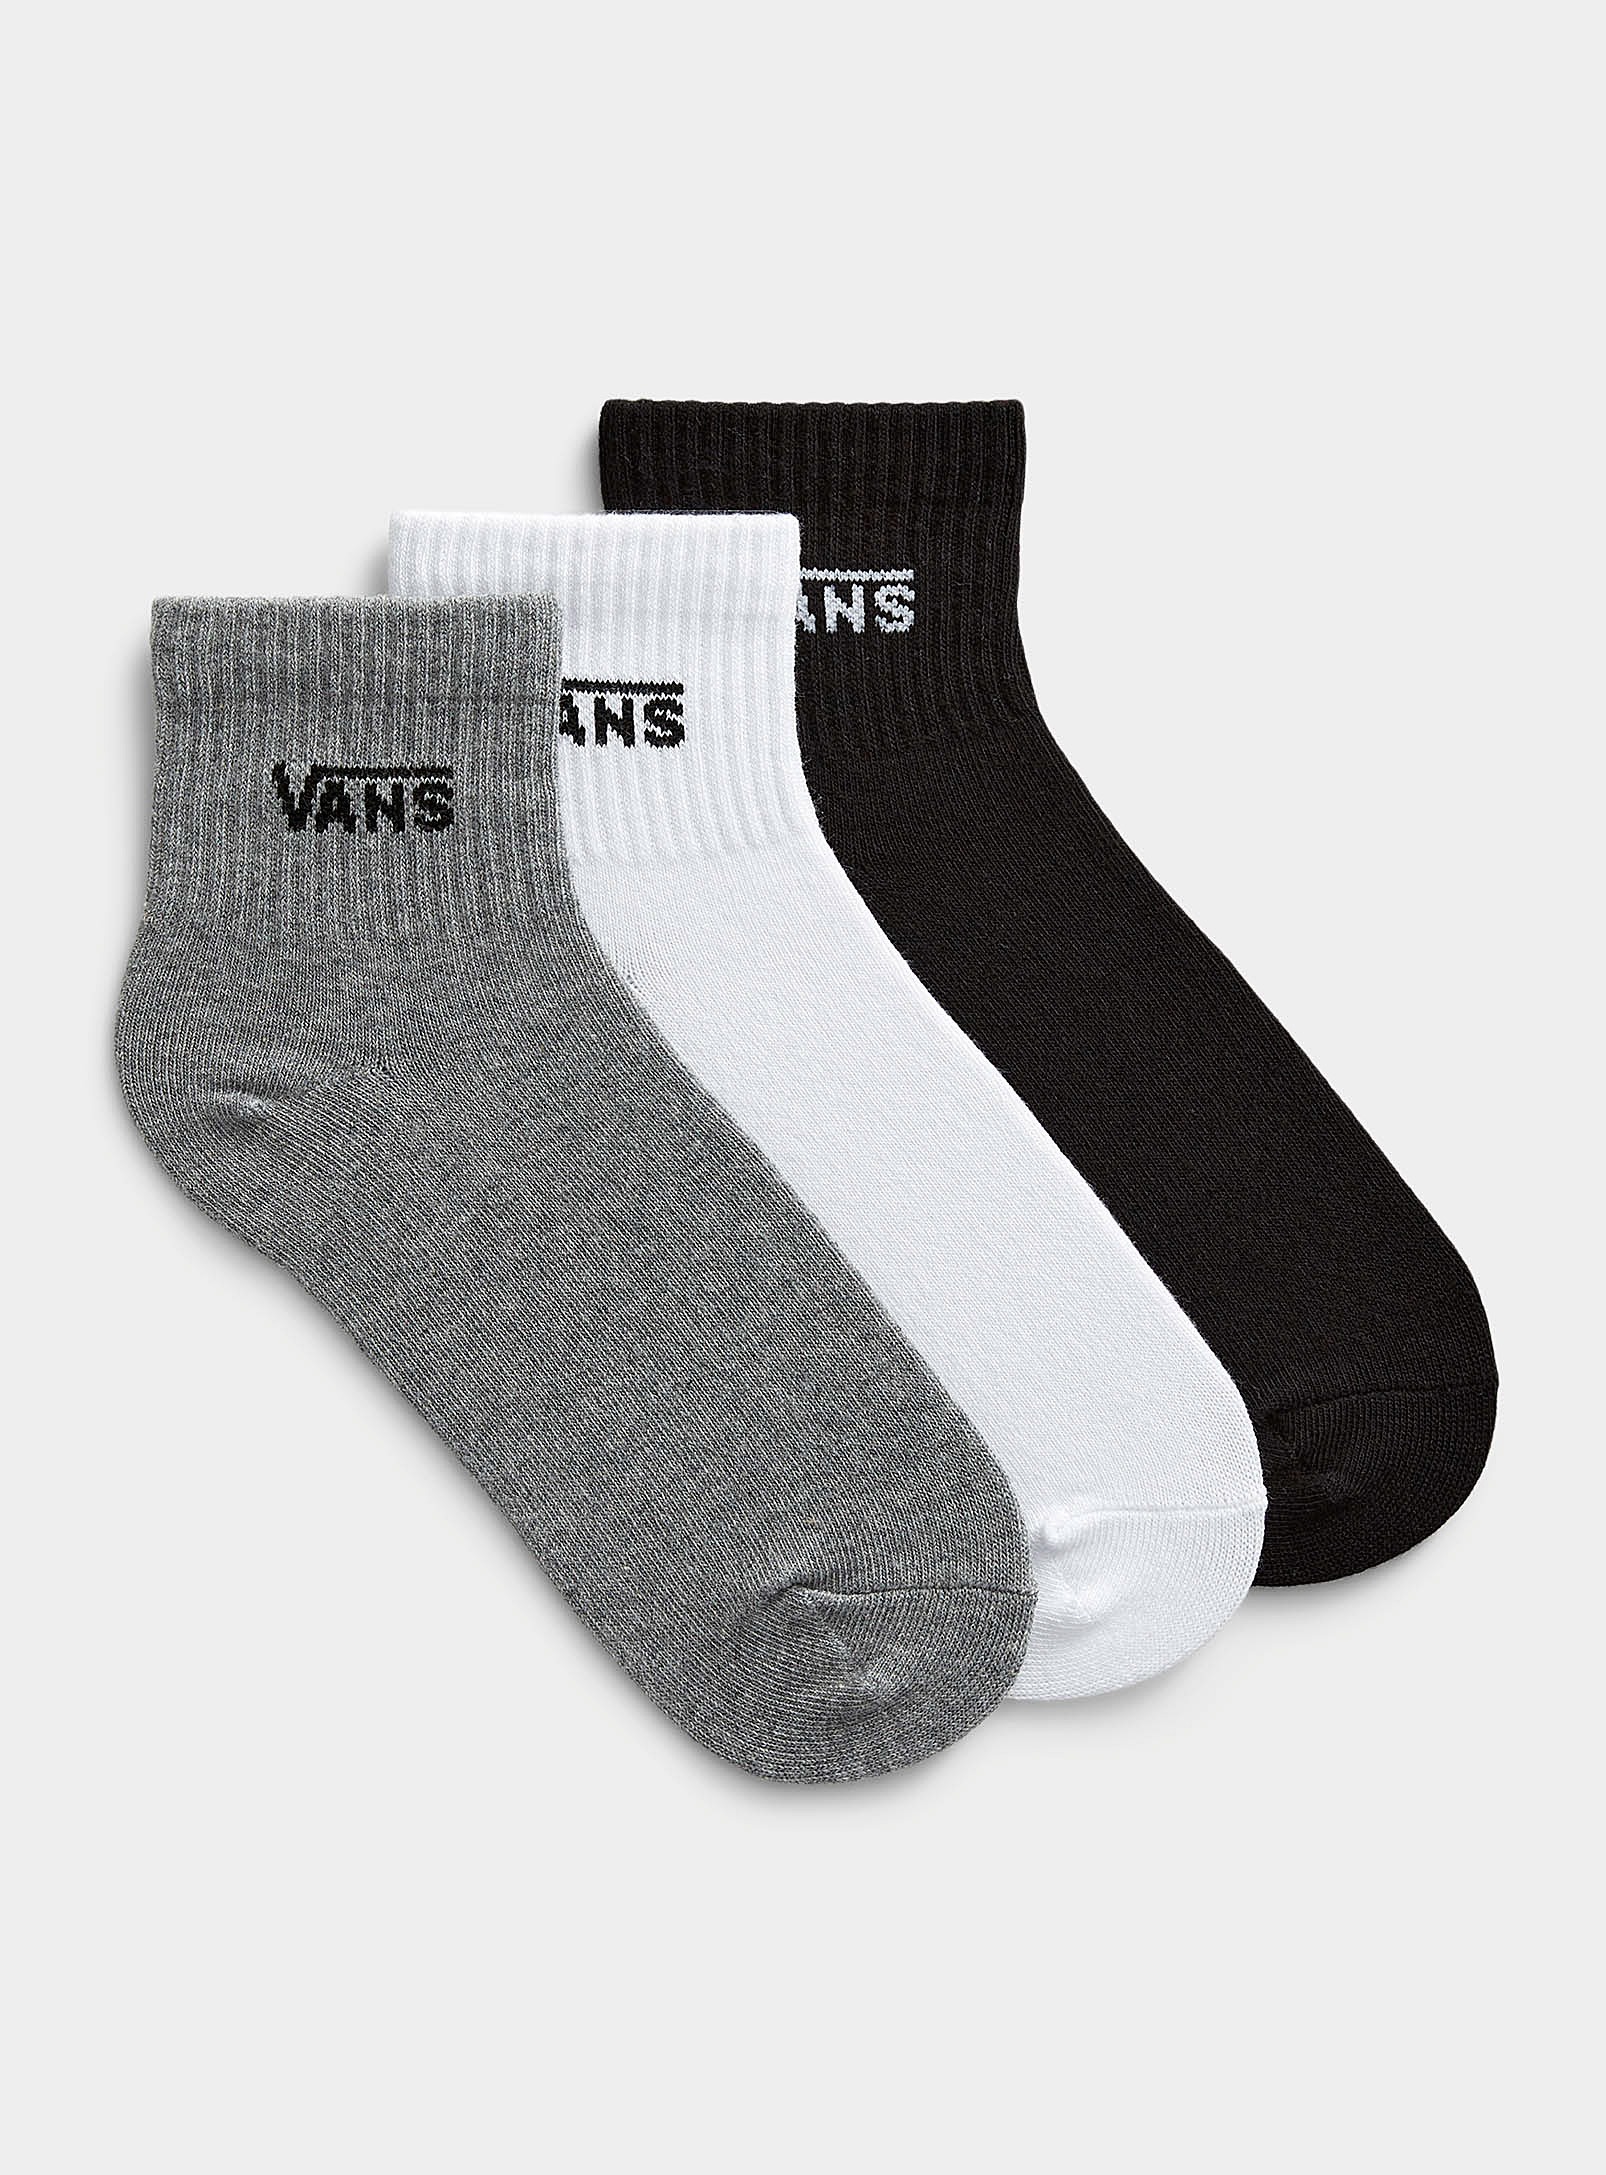 Vans Signature Ankle Socks Set Of 3 In Black